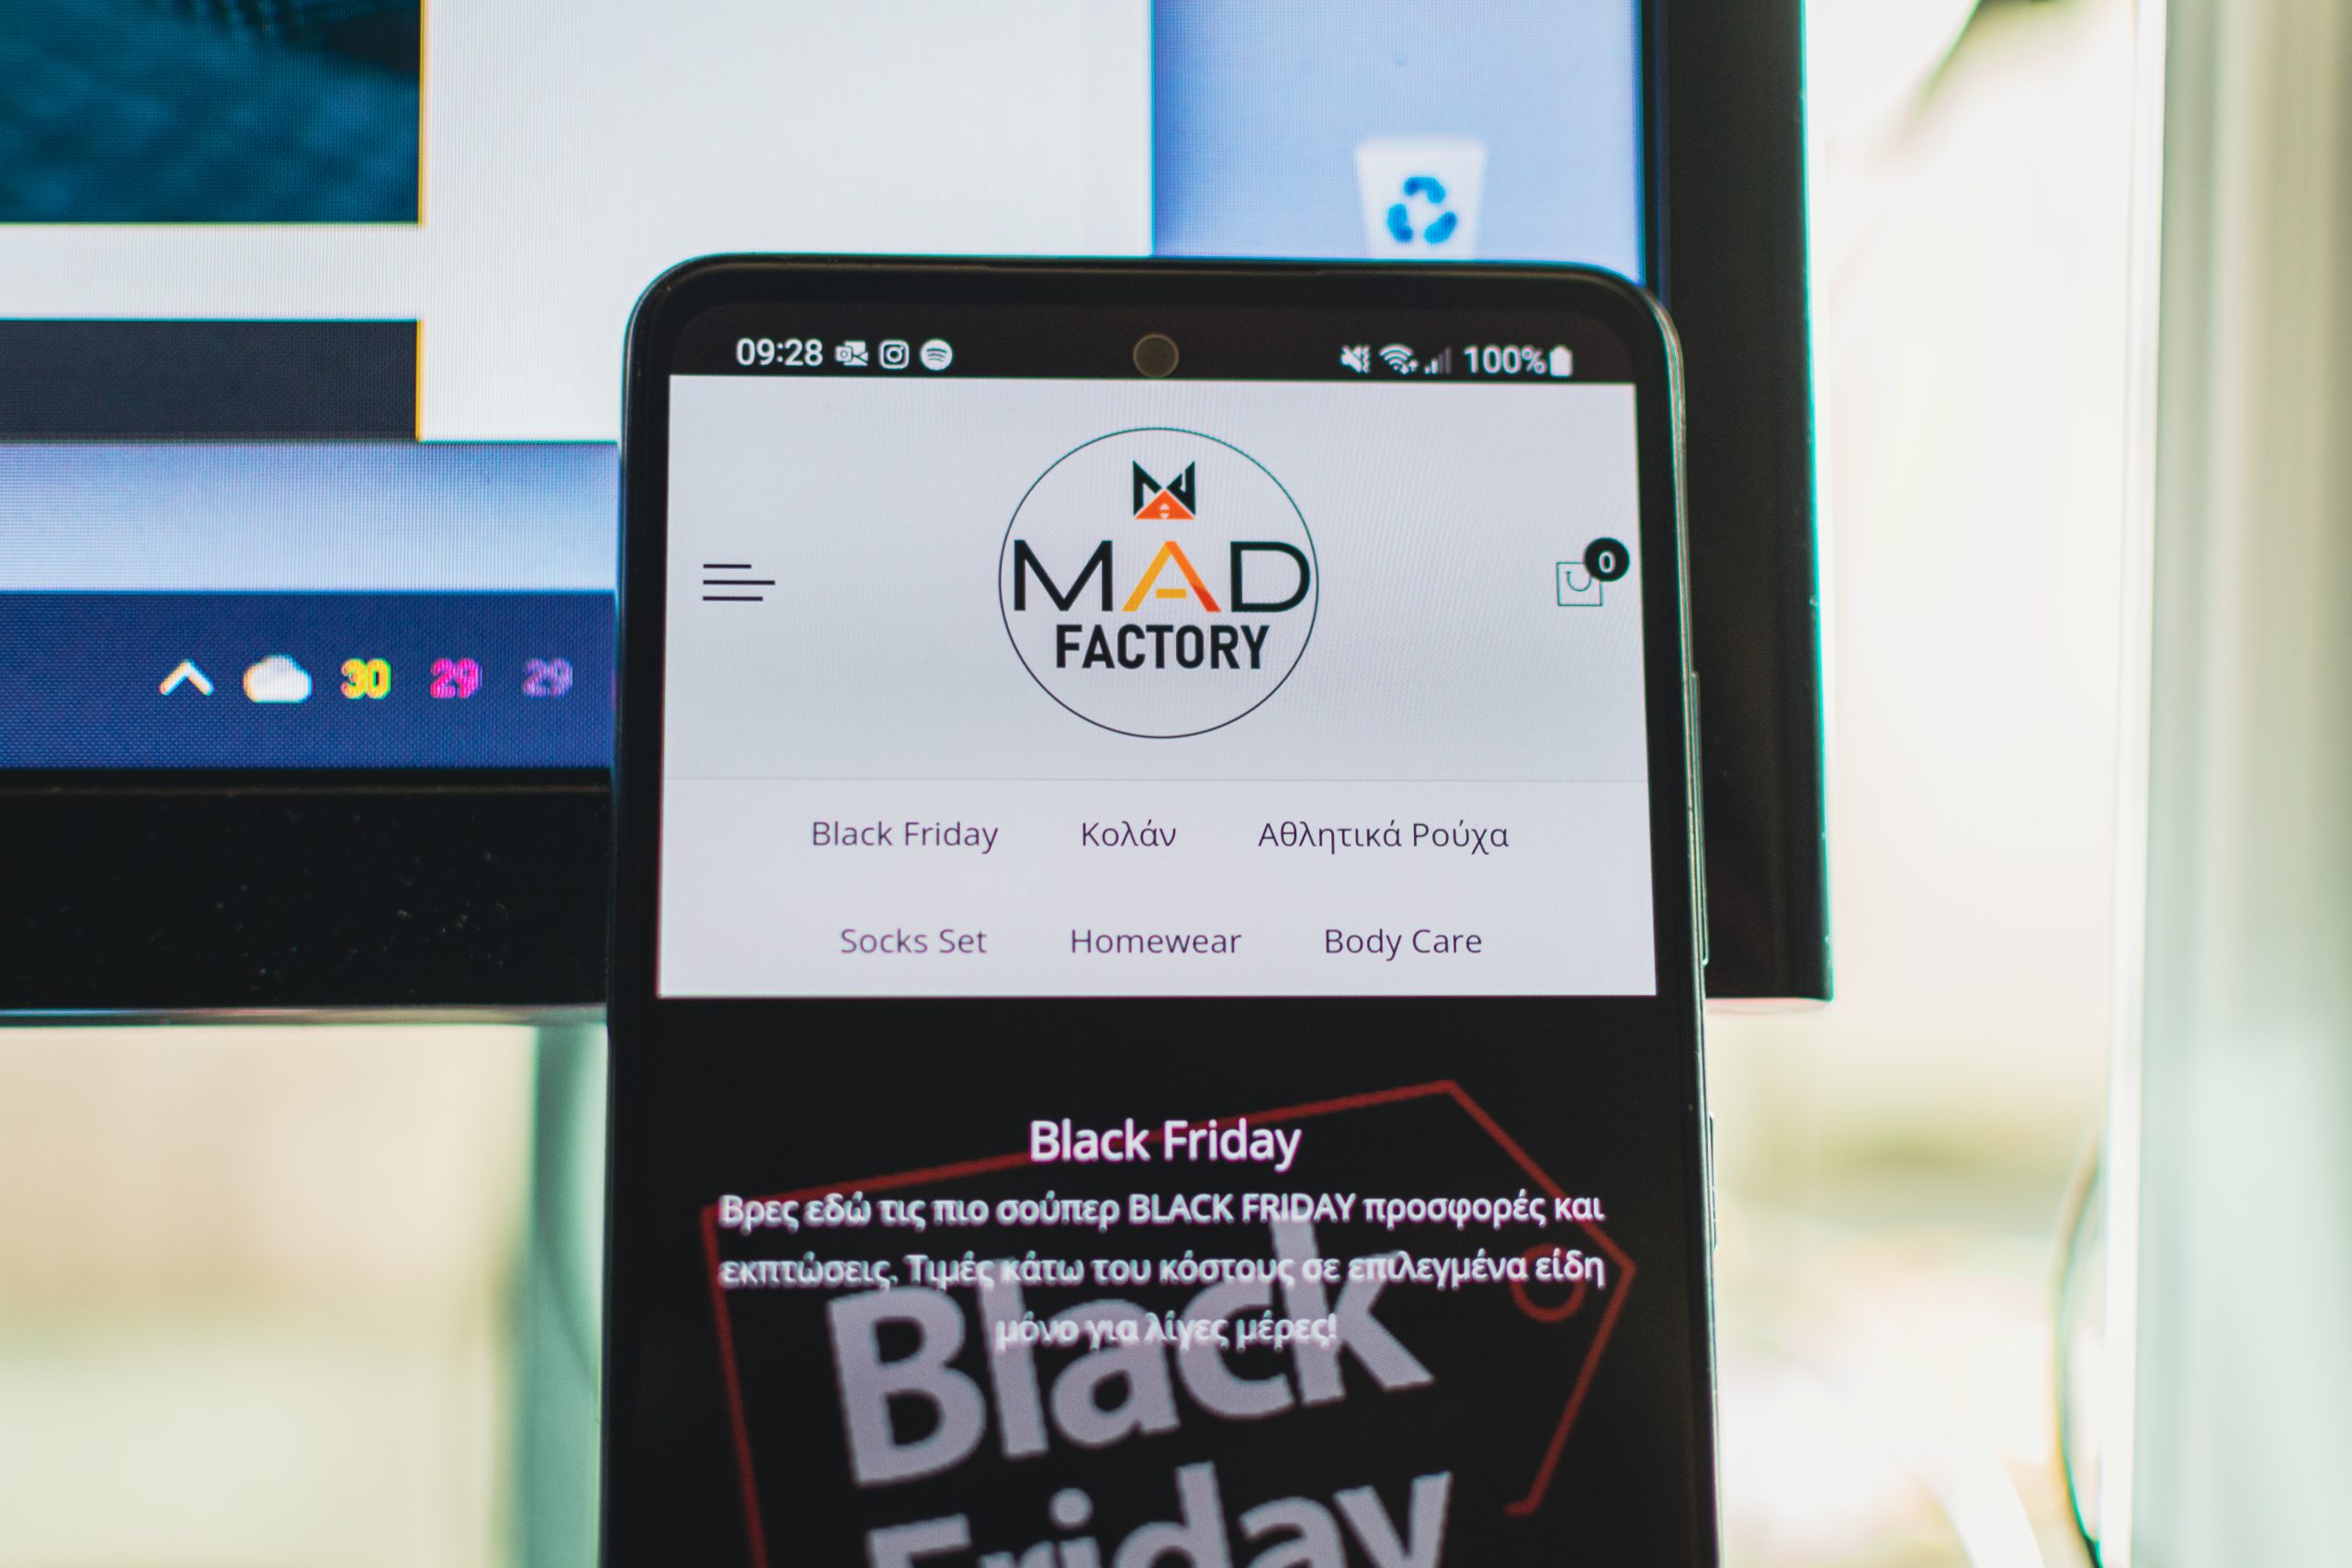 Black Friday - Ιστοσελίδες με προσφορές και εκπτώσεις στο Mad Factory